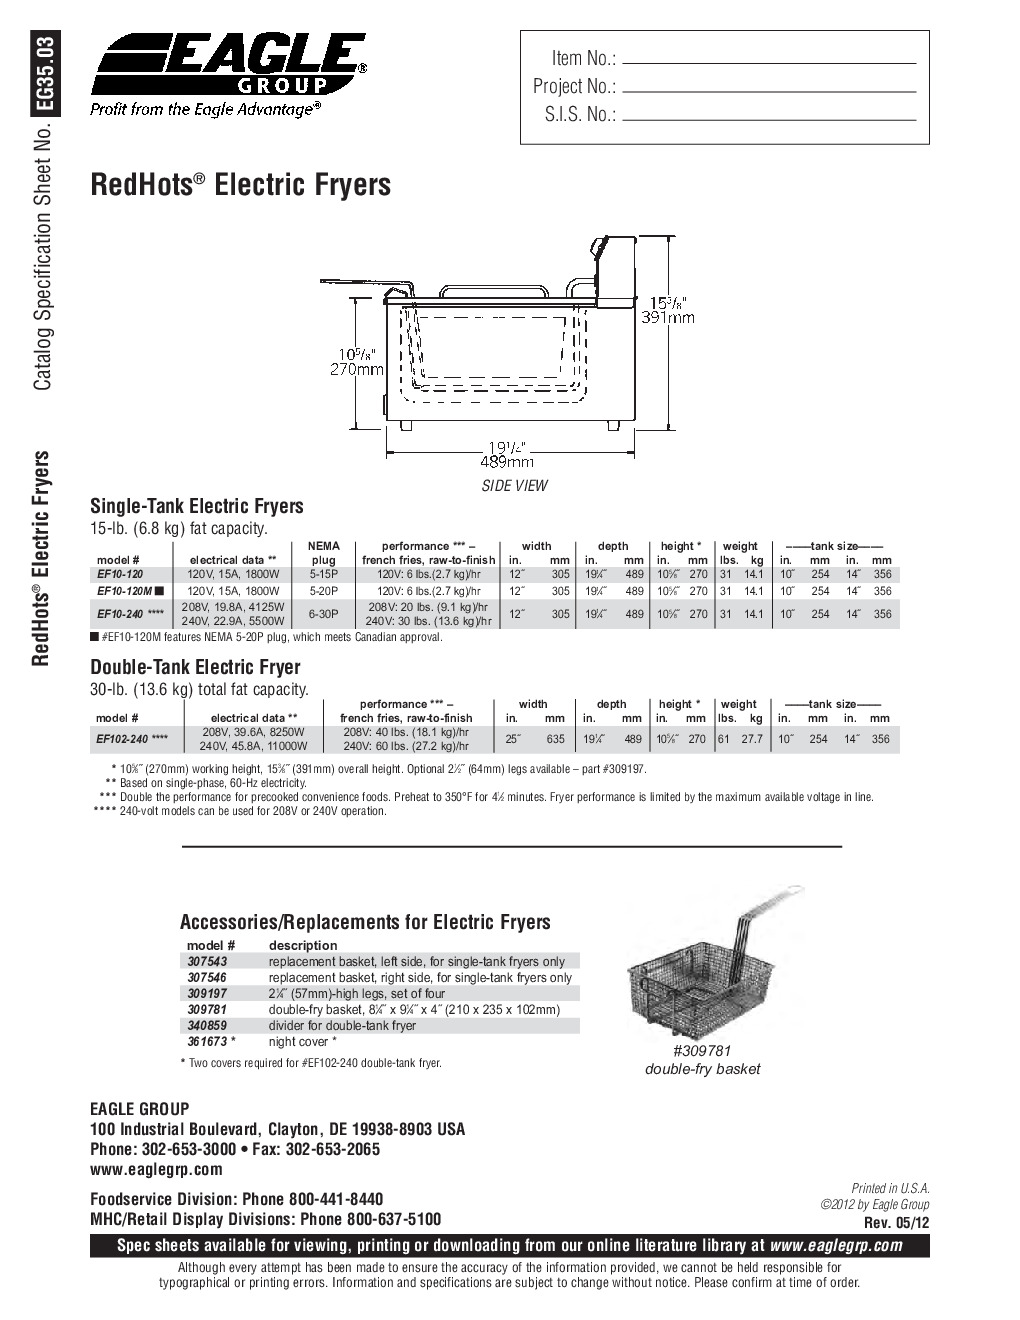 Eagle Group EF10-120 Full Pot Countertop Electric Fryer w/ 15-lb Capacity, 2 Baskets, 1800w